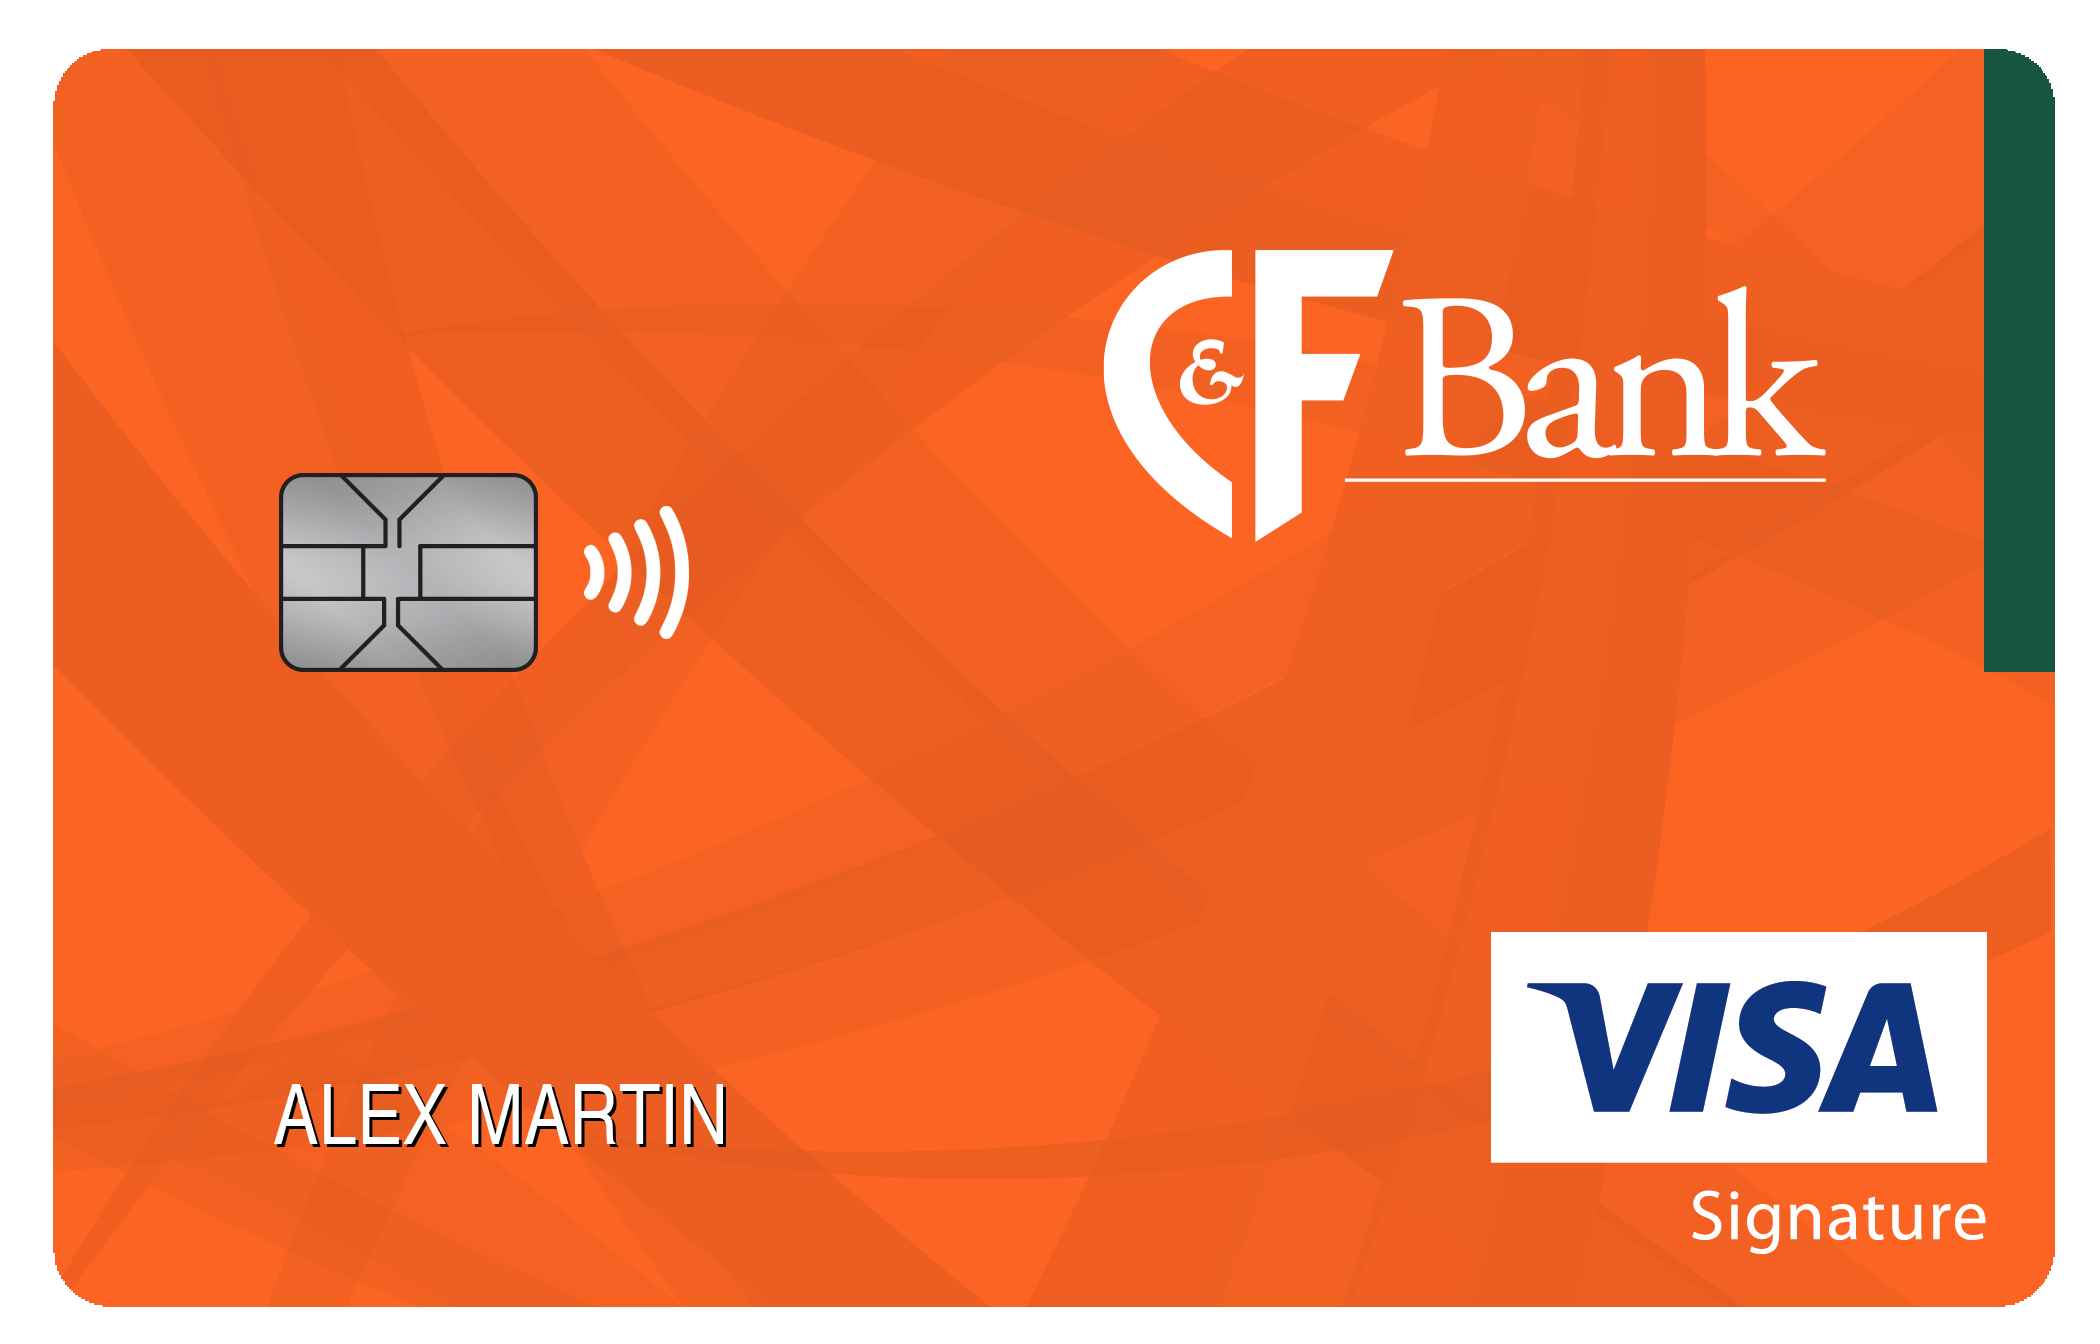 C&F Bank Travel Rewards+ Card